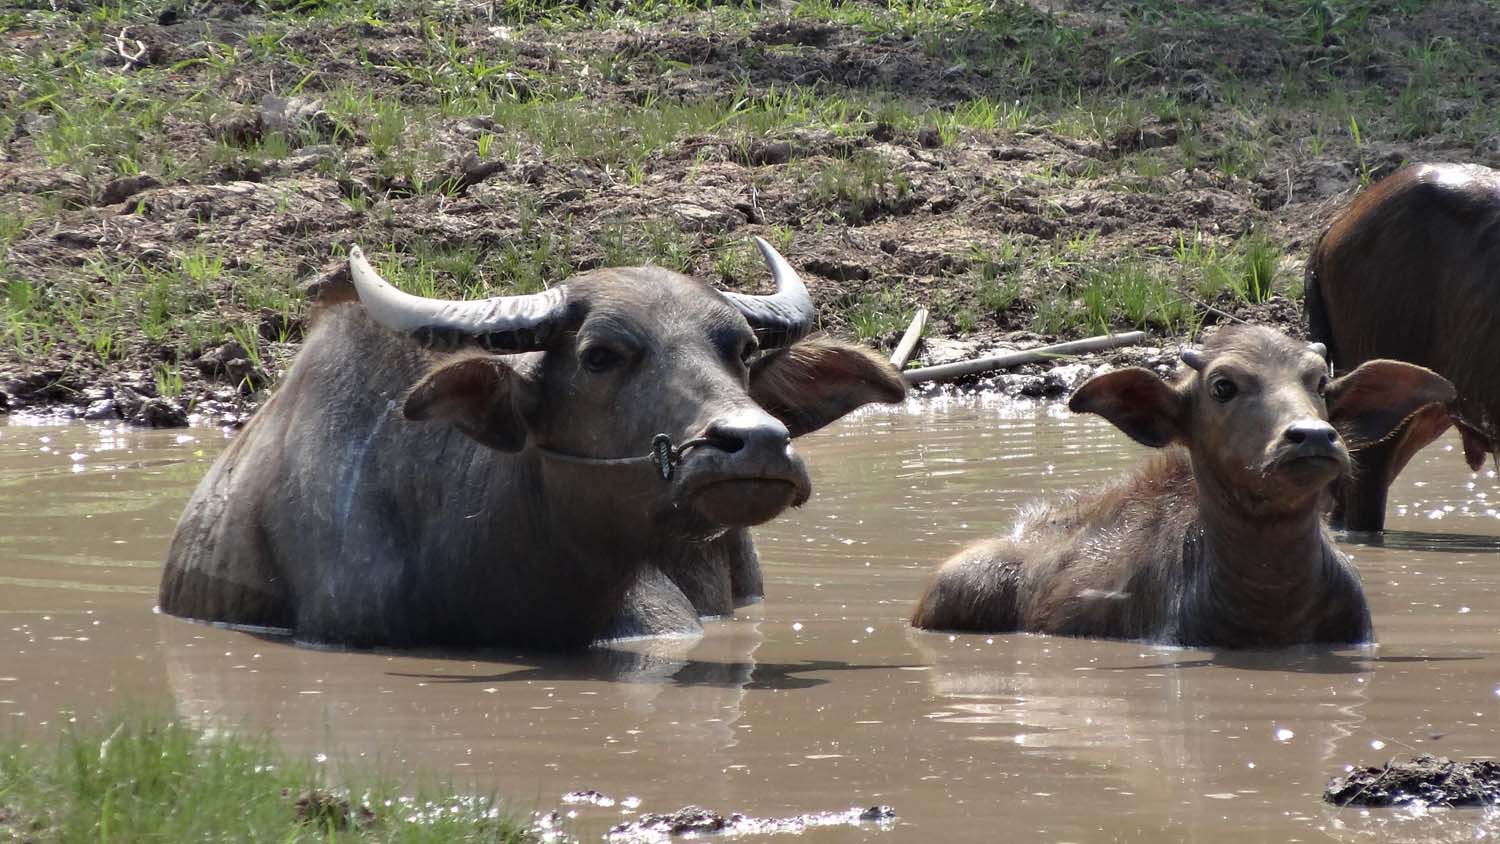 more water buffaloes enjoying a mud bath